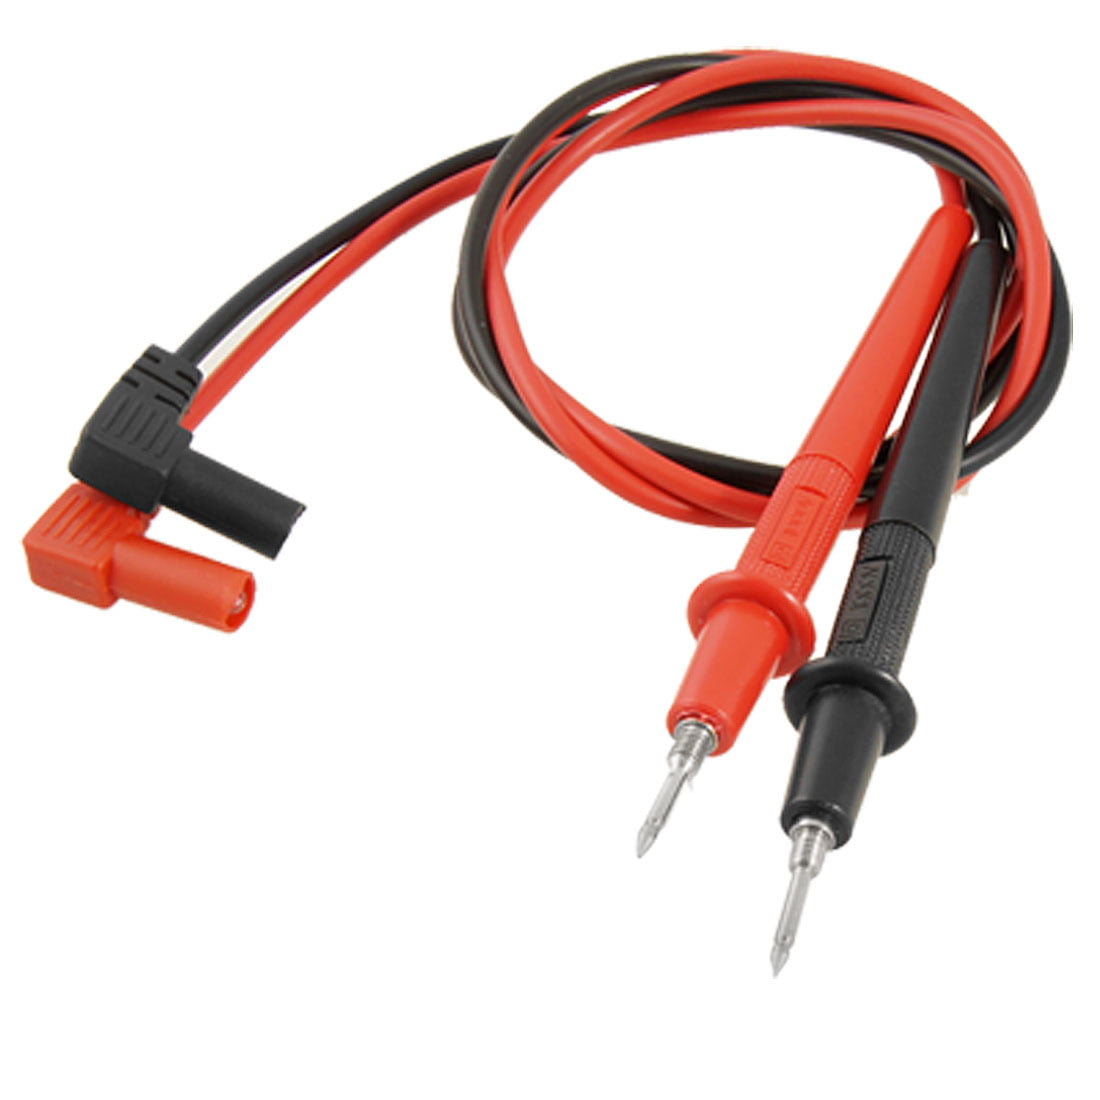 2x Banana Plug Probe Cable to Alligator Test Lead Clip Multimeter Lead Wire 80cm 